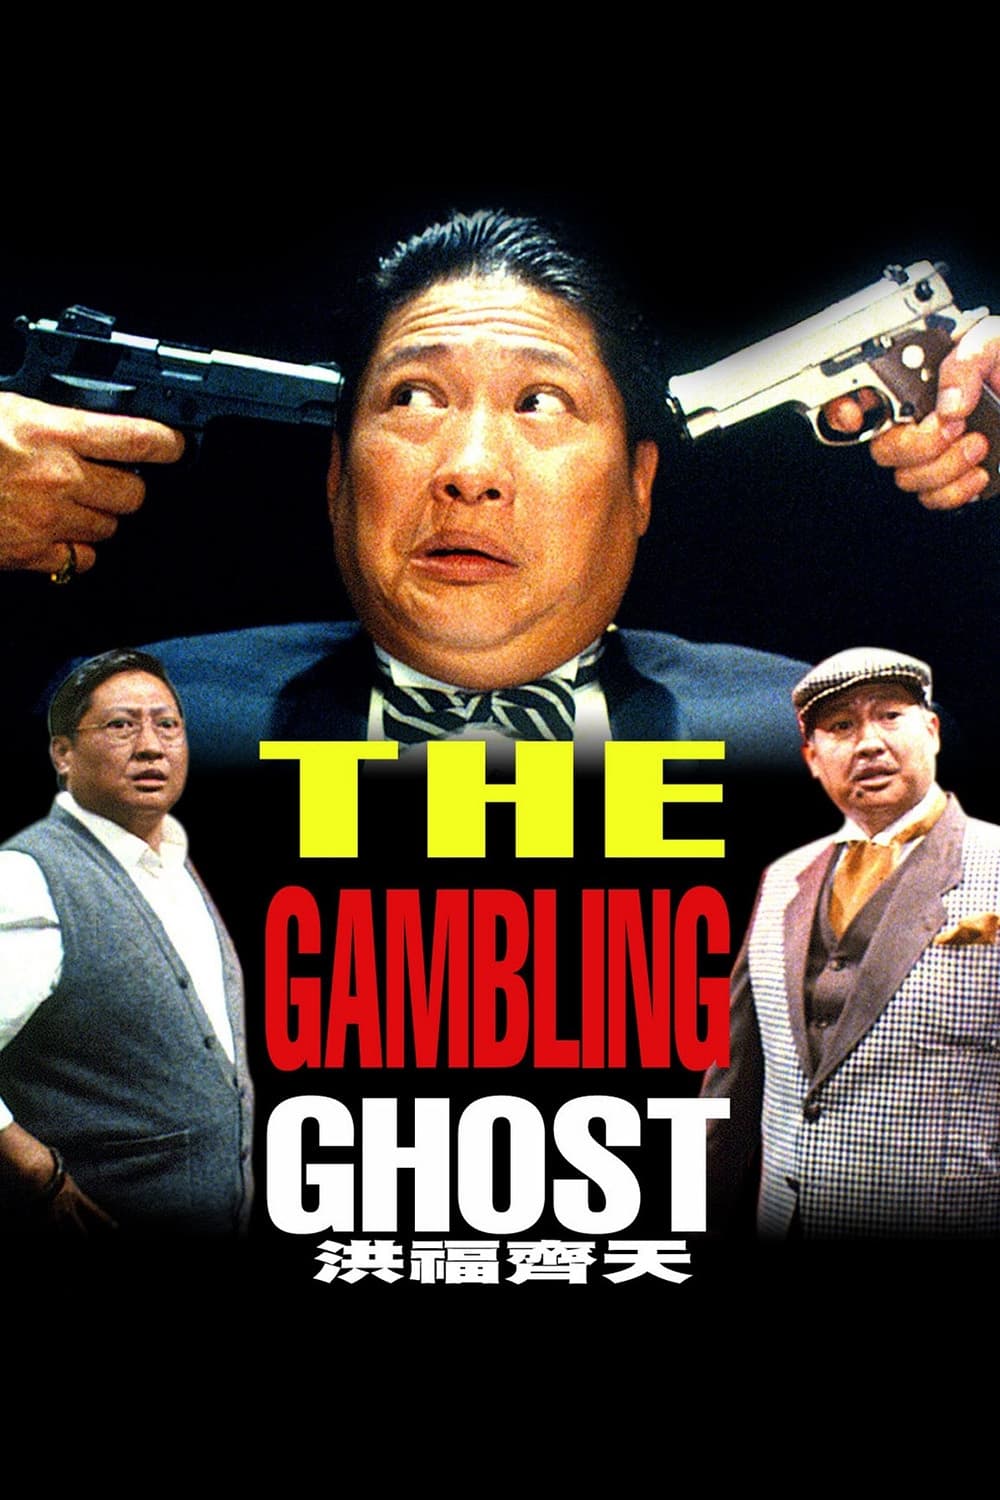 The Gambling Ghost (1991)